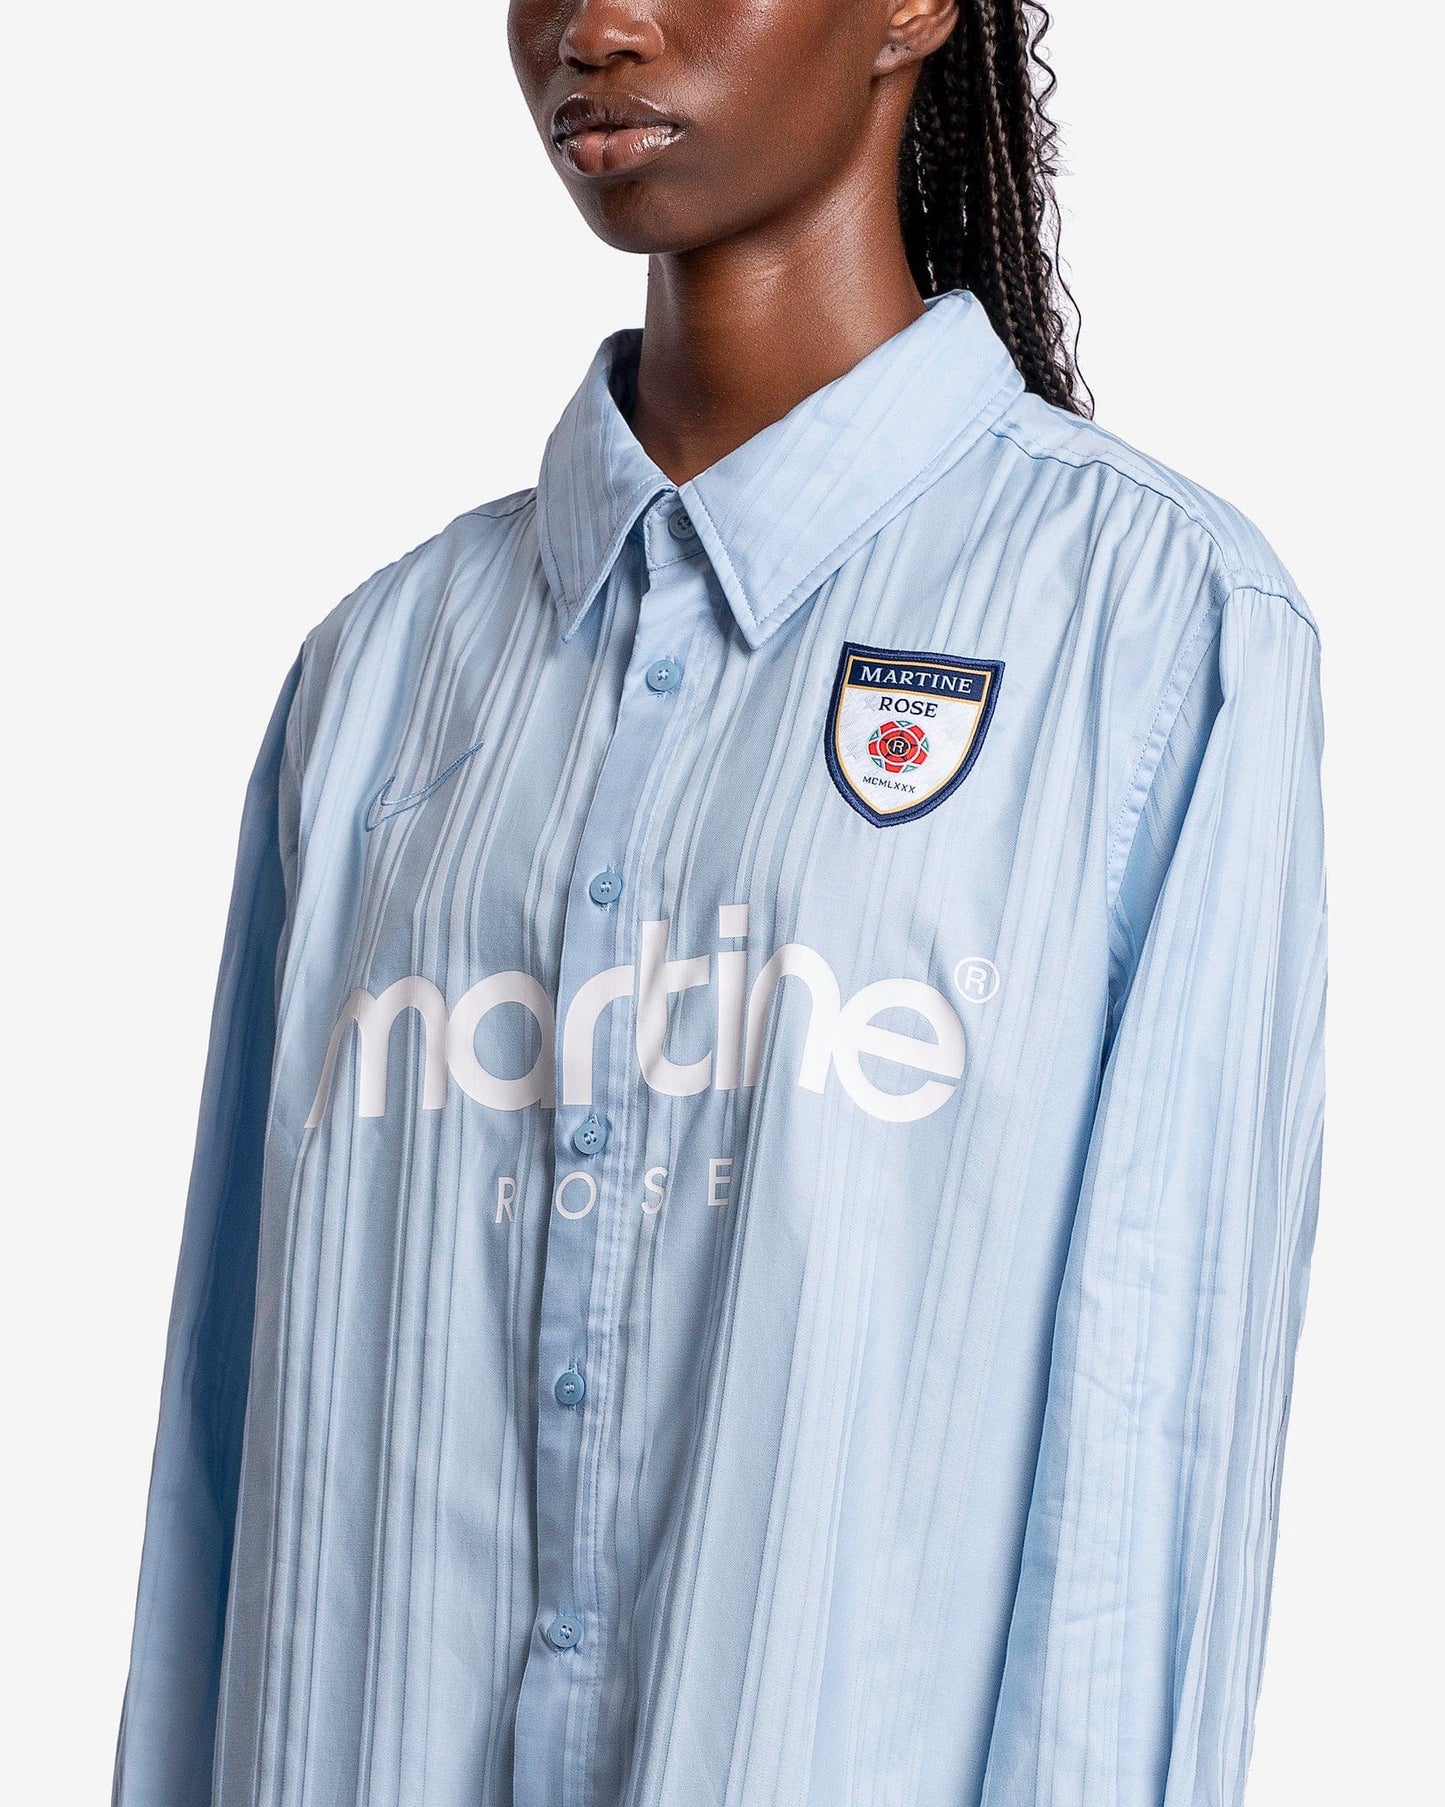 Nike Men's Shirt Nike x Martine Rose Dress Shirt in Psychic Blue